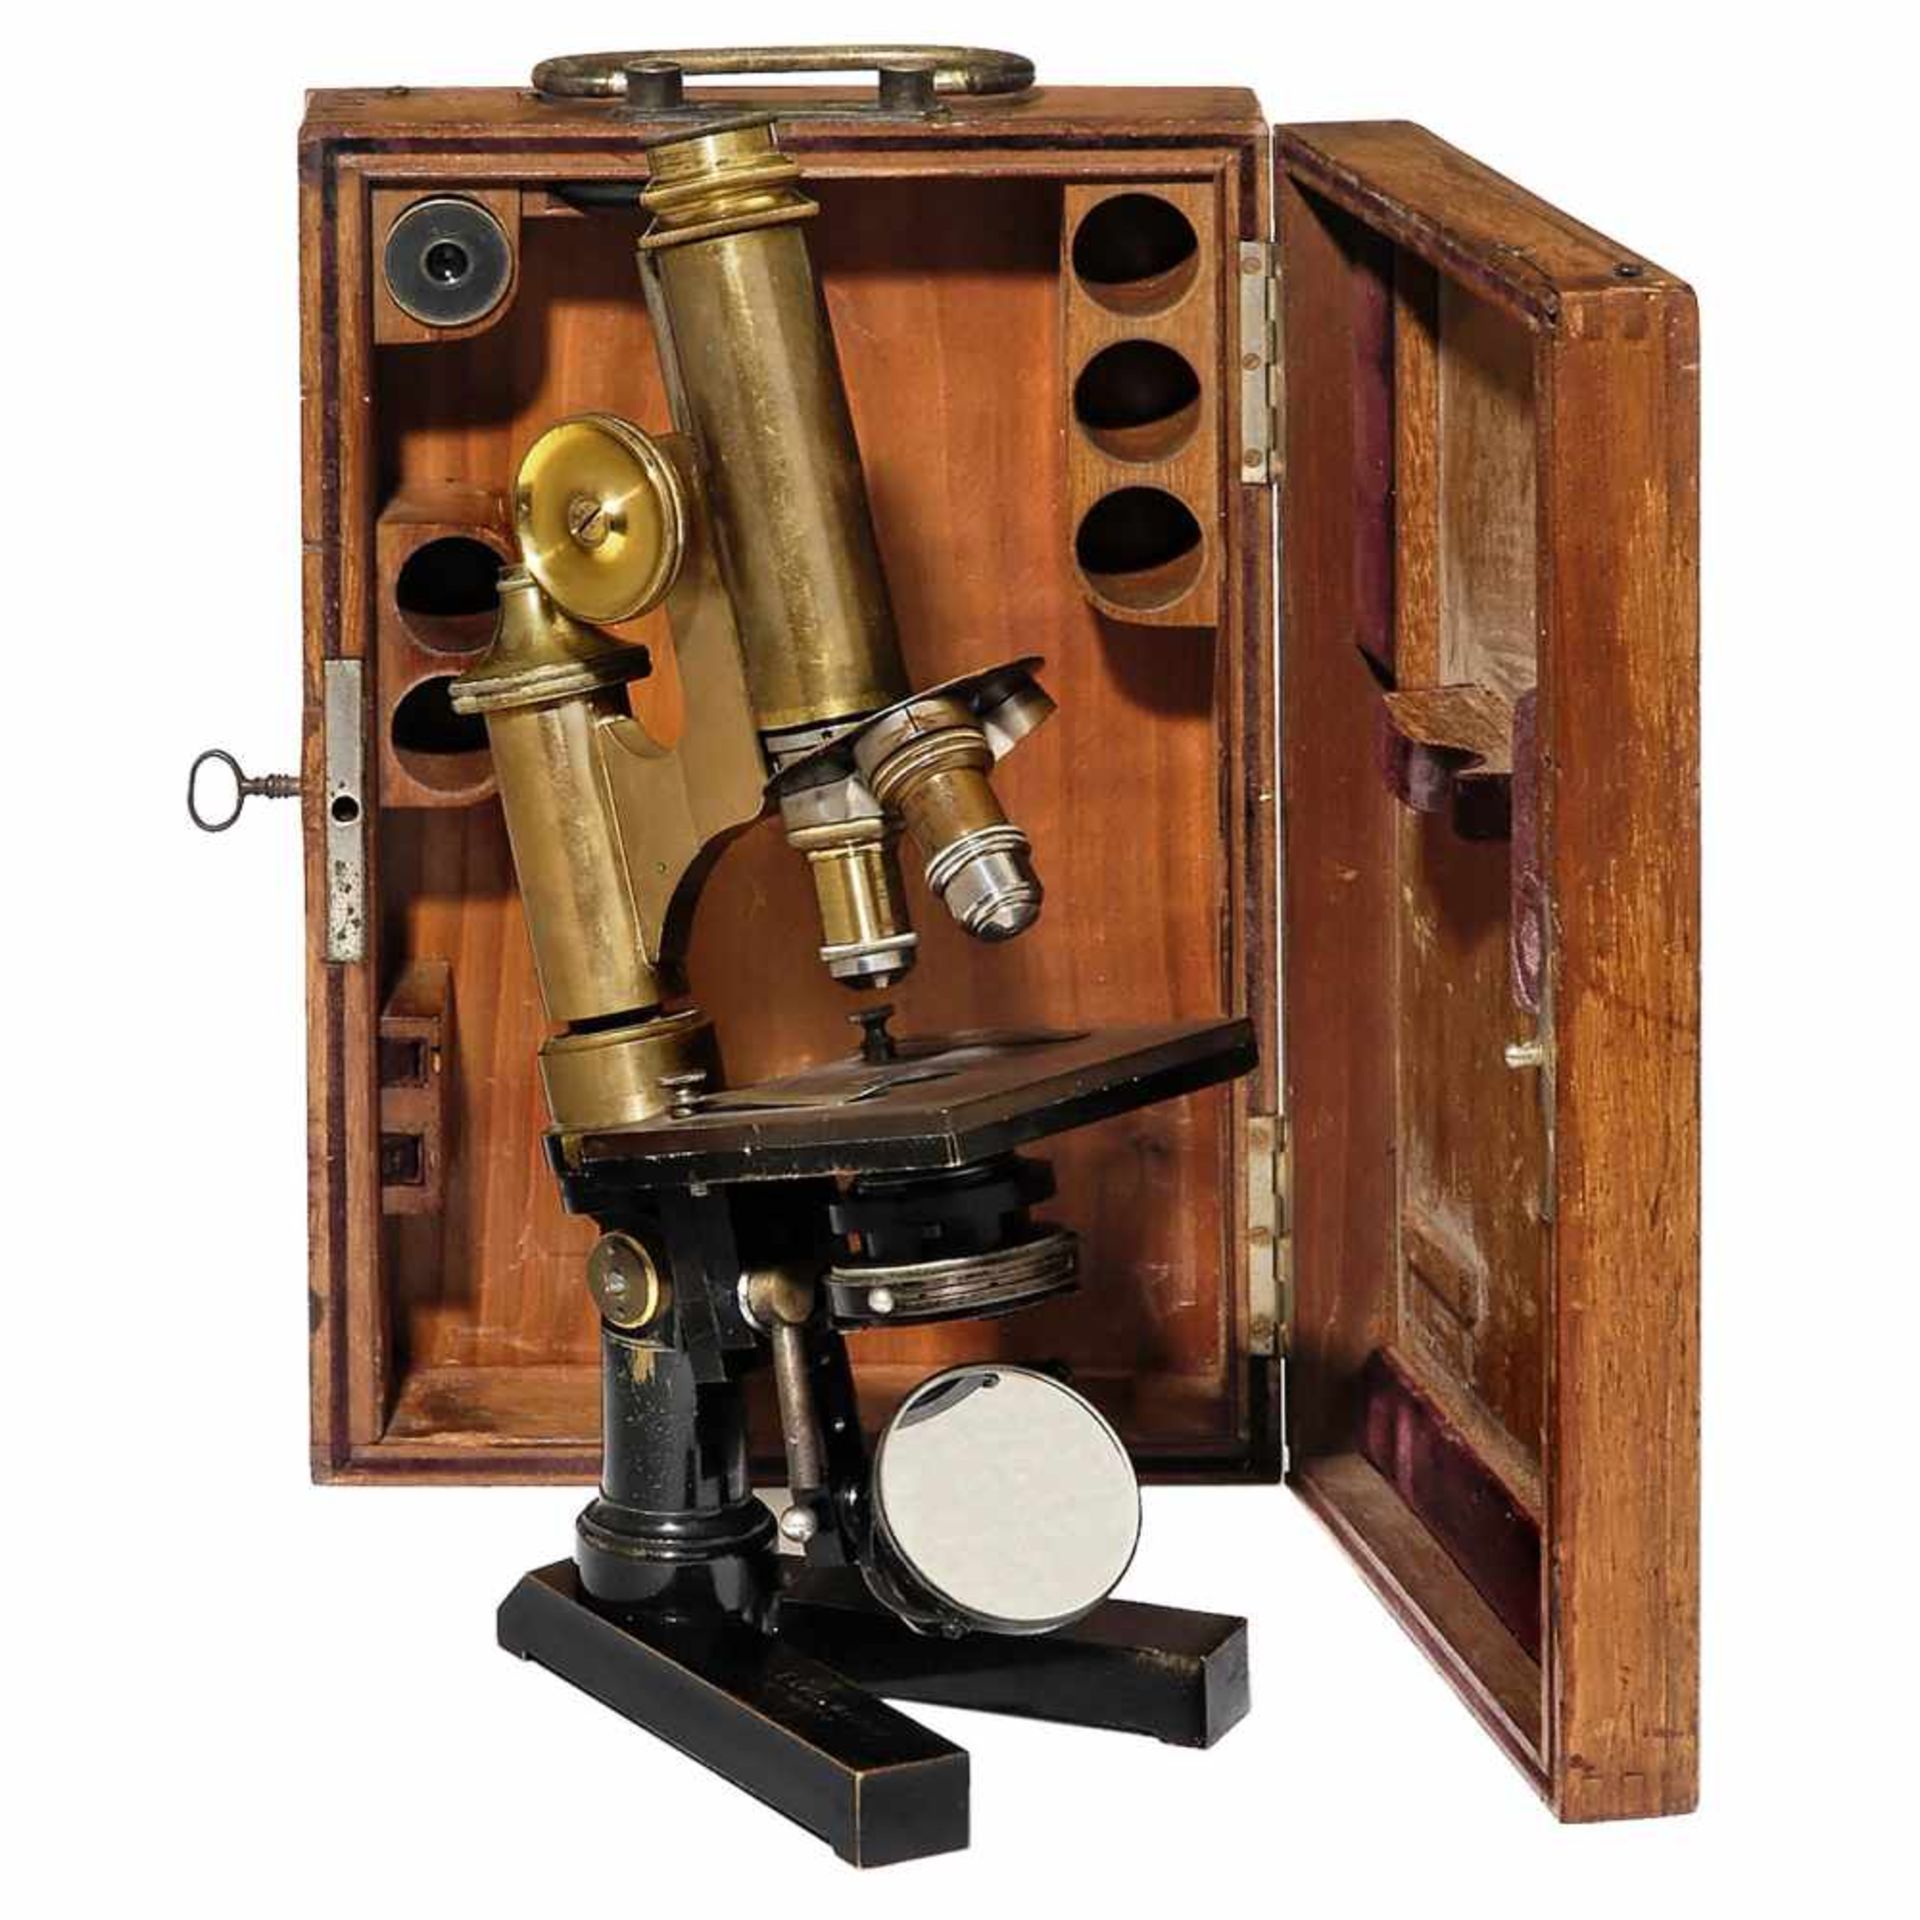 Laboratory Microscope by Ernst Leitz, 1905Ernst Leitz, Wetzlar, Germany. Serial no. 81750,